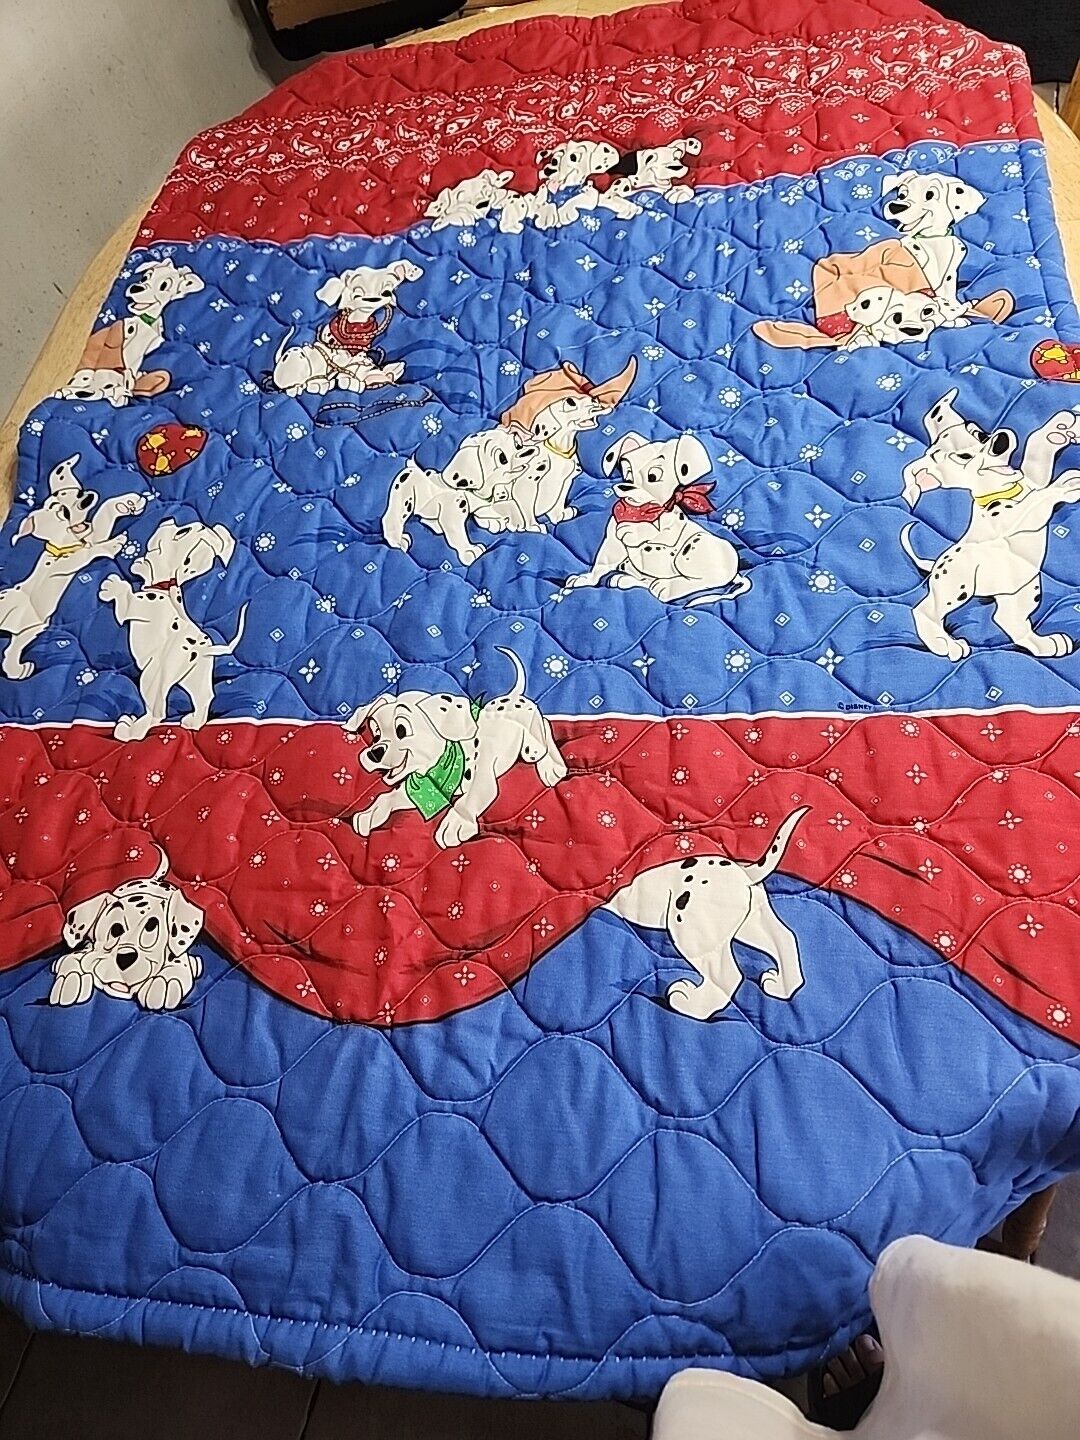 Vintage Disney 101 Dalmatians Baby Comforter Quilt Bedding With Extras